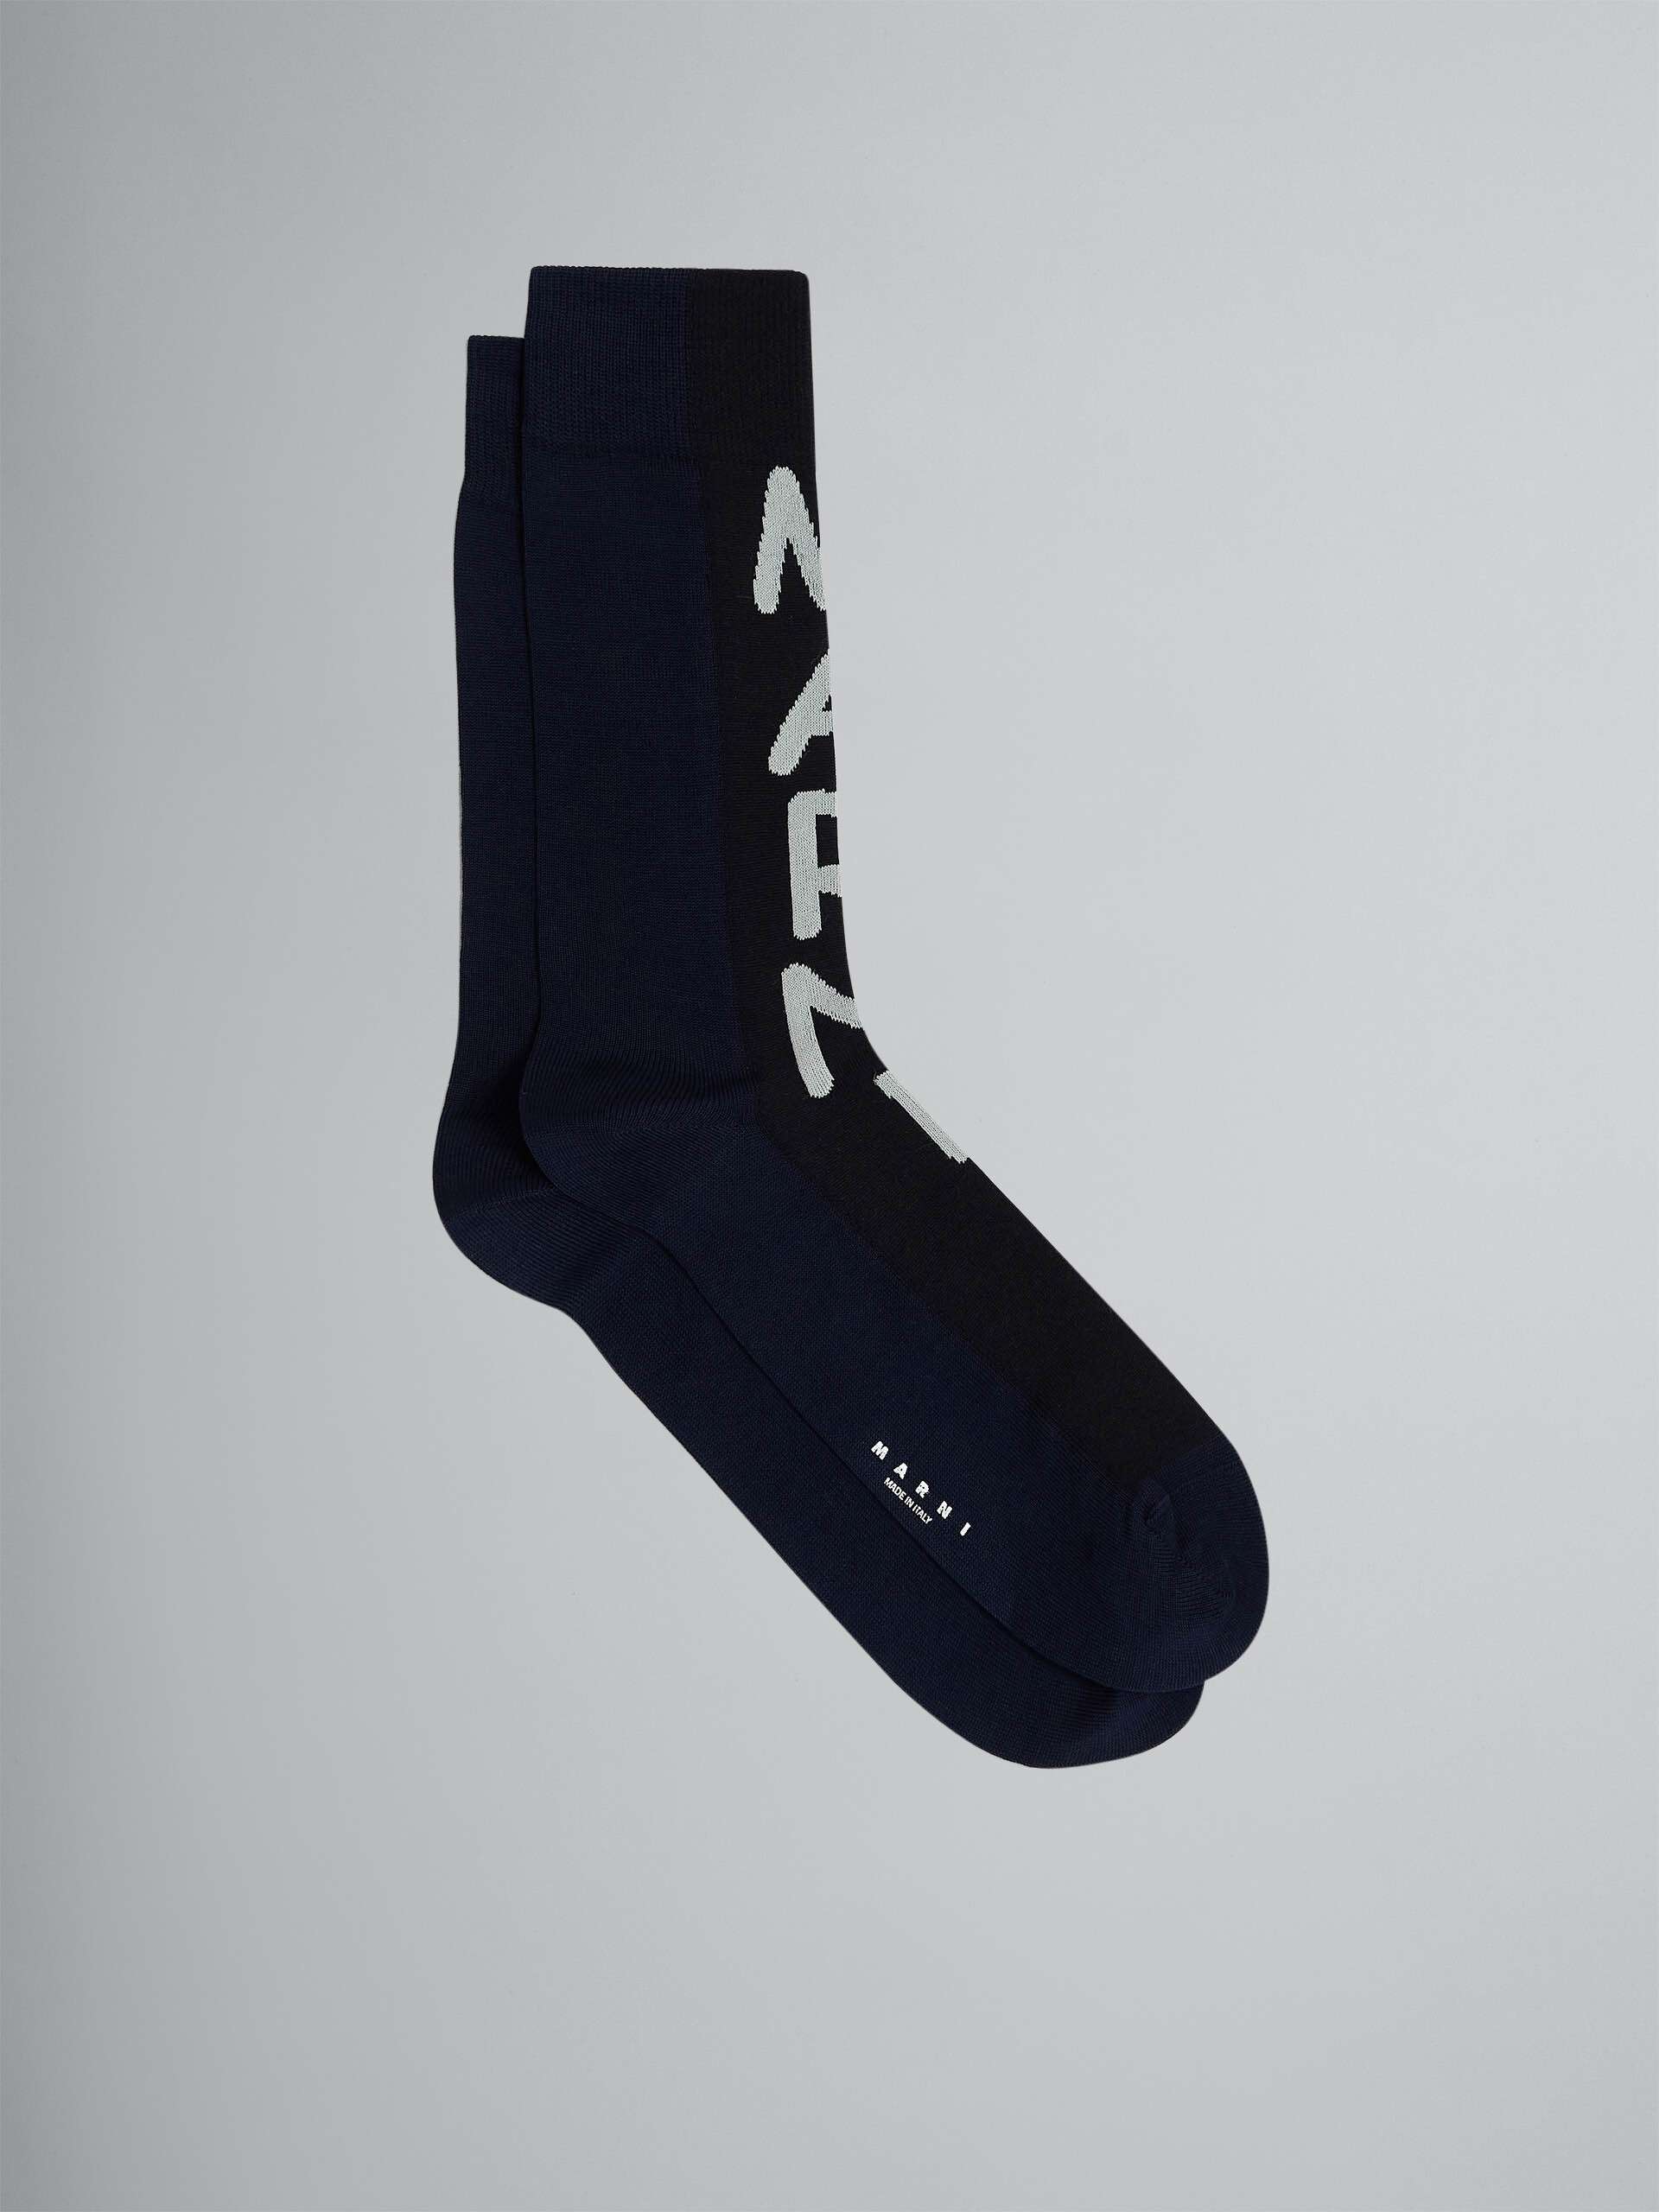 Blue MARNI ON ME cotton and nylon socks - Socks - Image 1